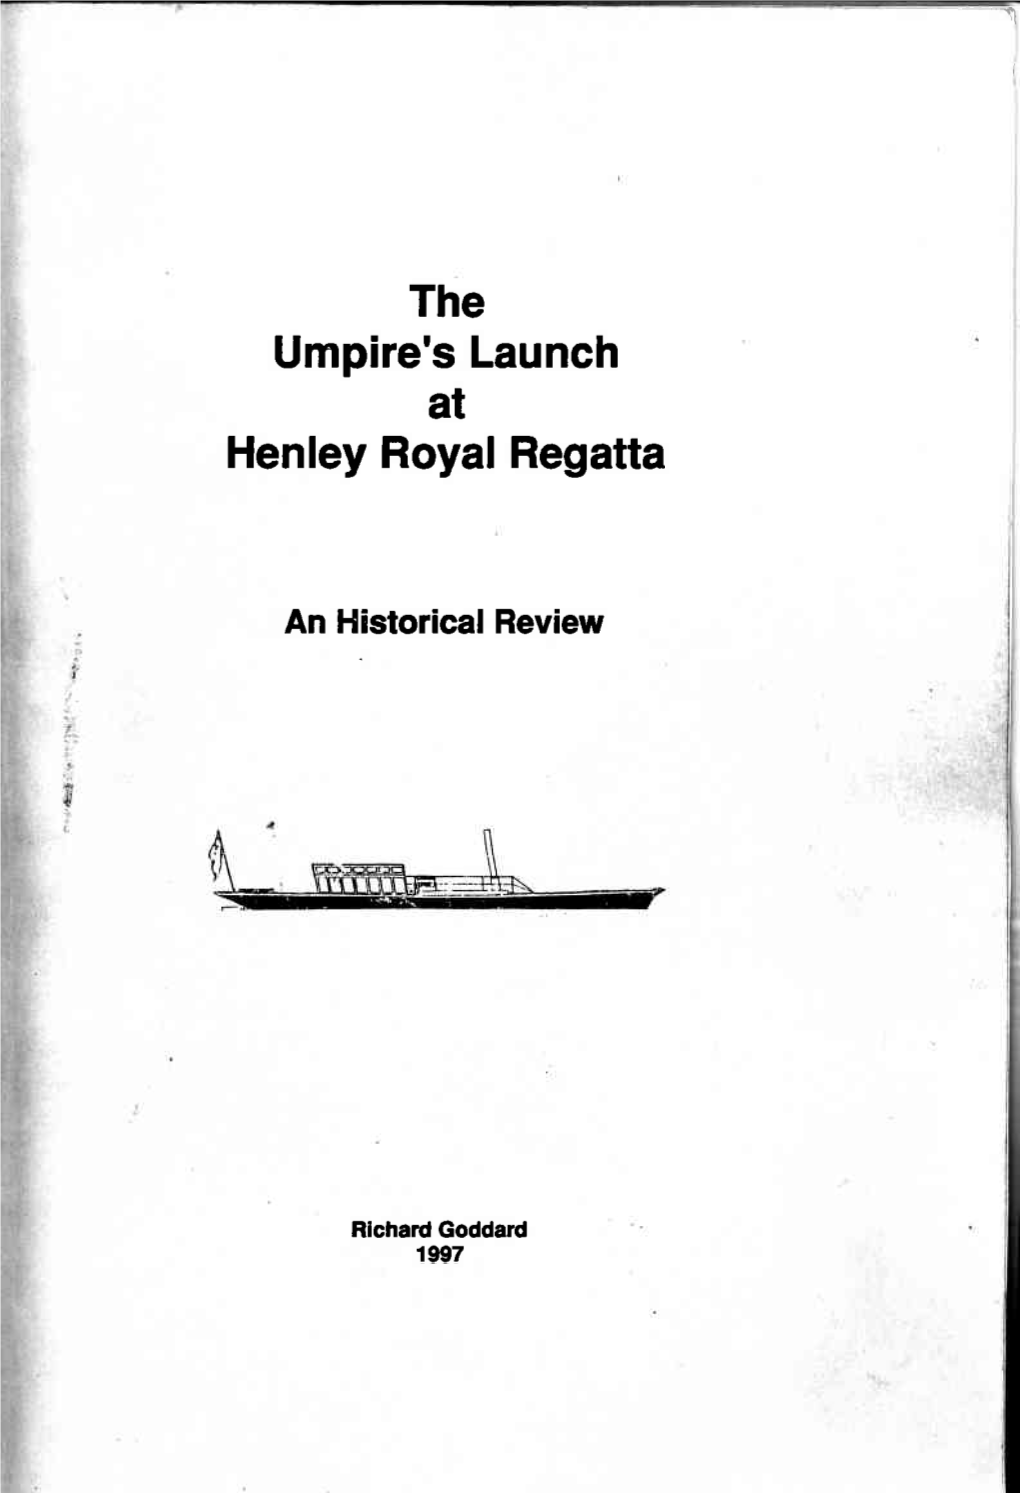 The Umpire's Launch at Henley Royal Regatta